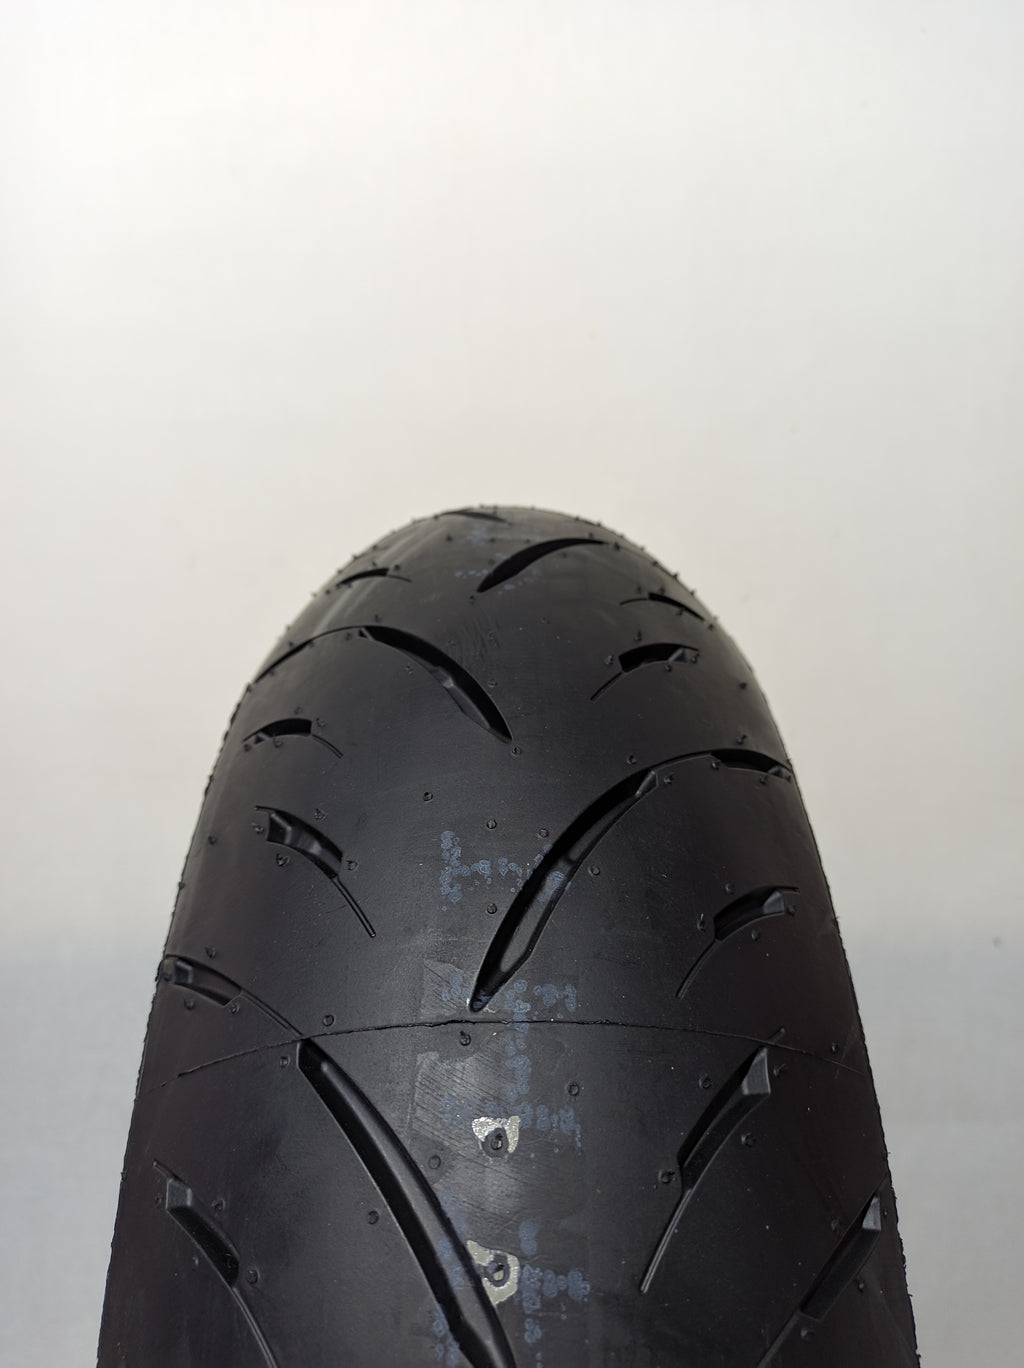 Llanta 160x60x17 R Dunlop GPR300 69H Tubular